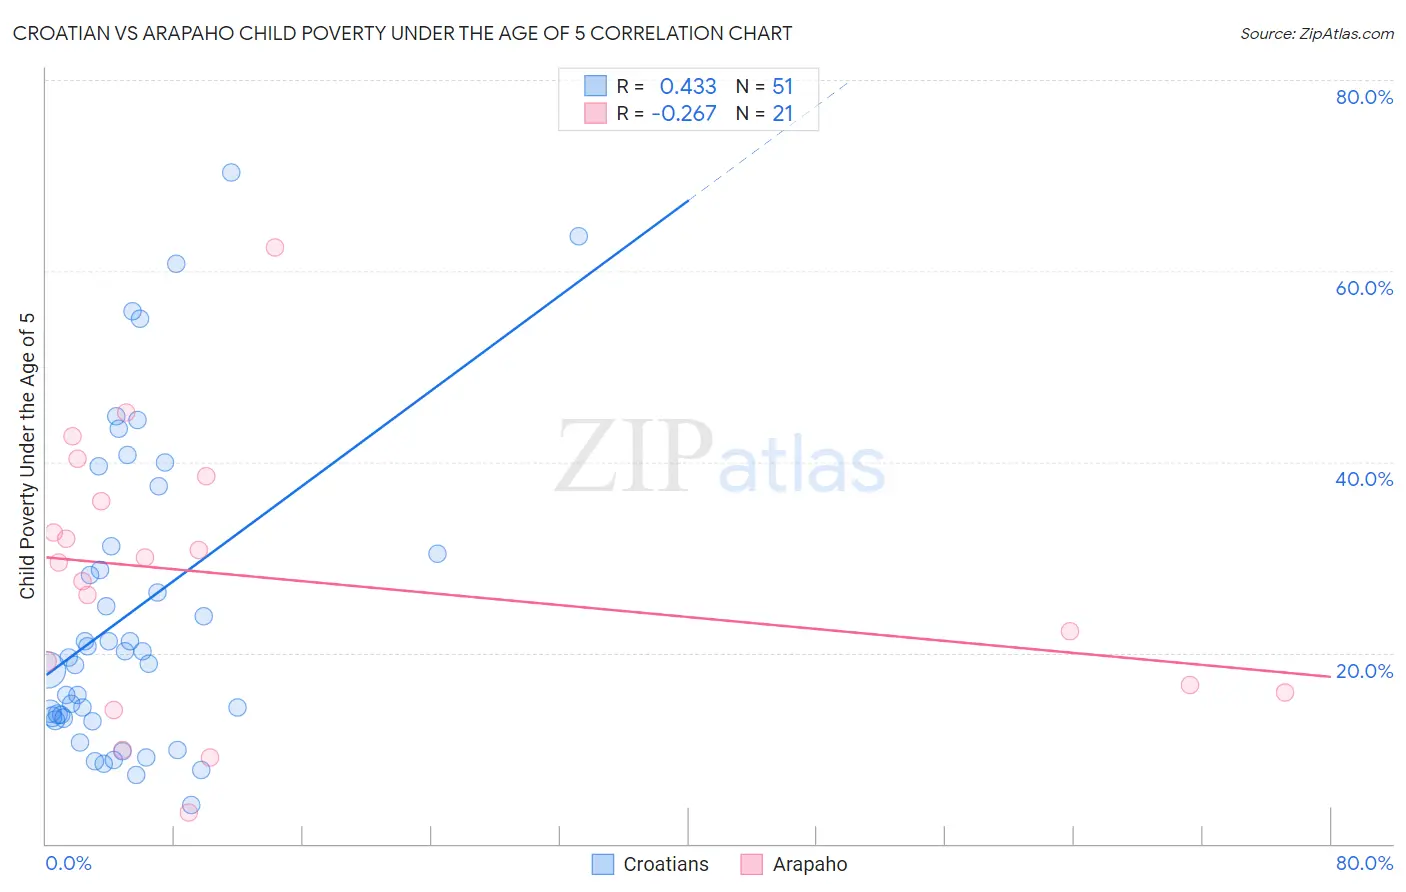 Croatian vs Arapaho Child Poverty Under the Age of 5